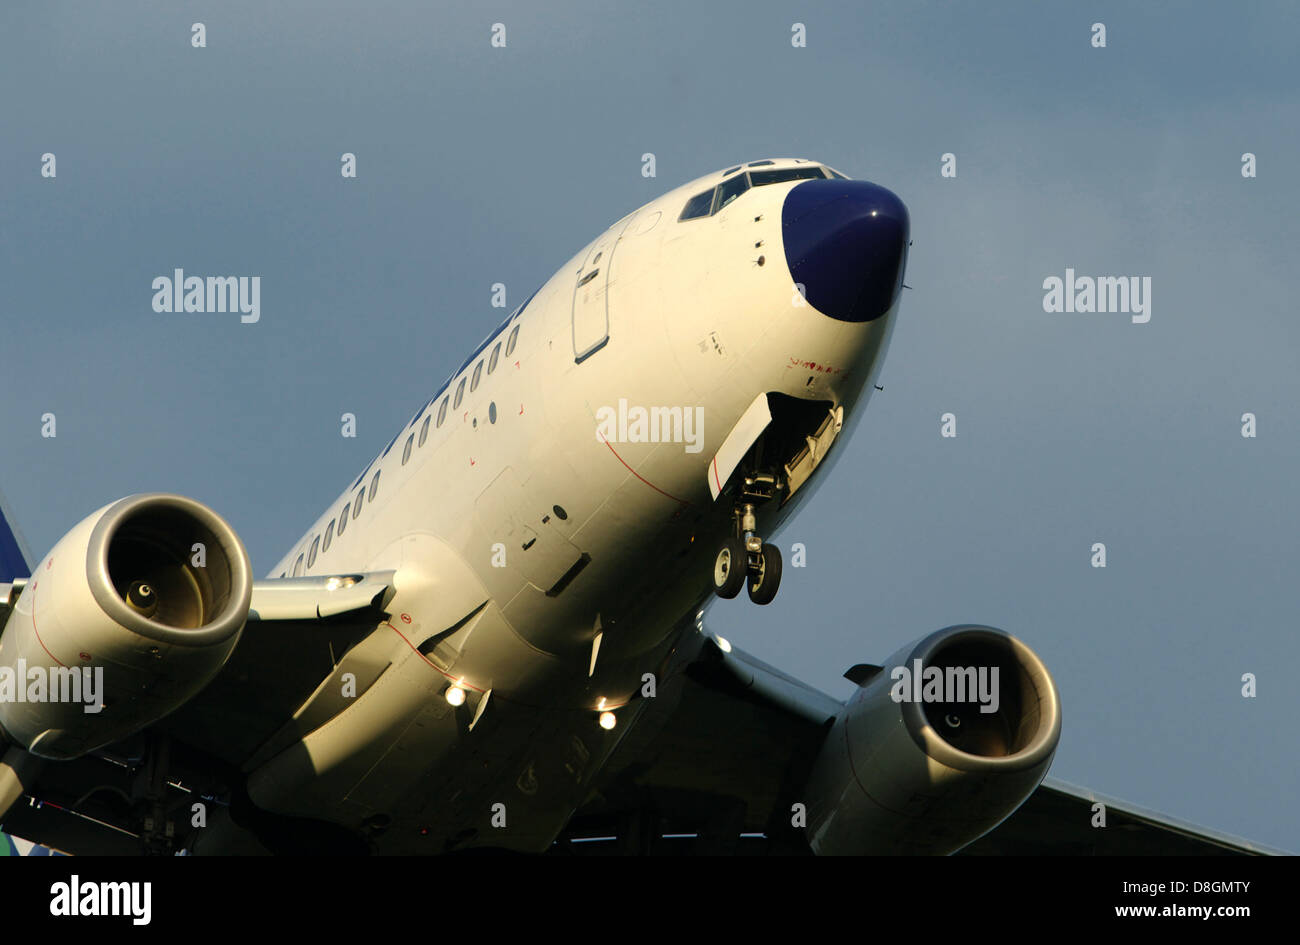 landing aircraft Stock Photo